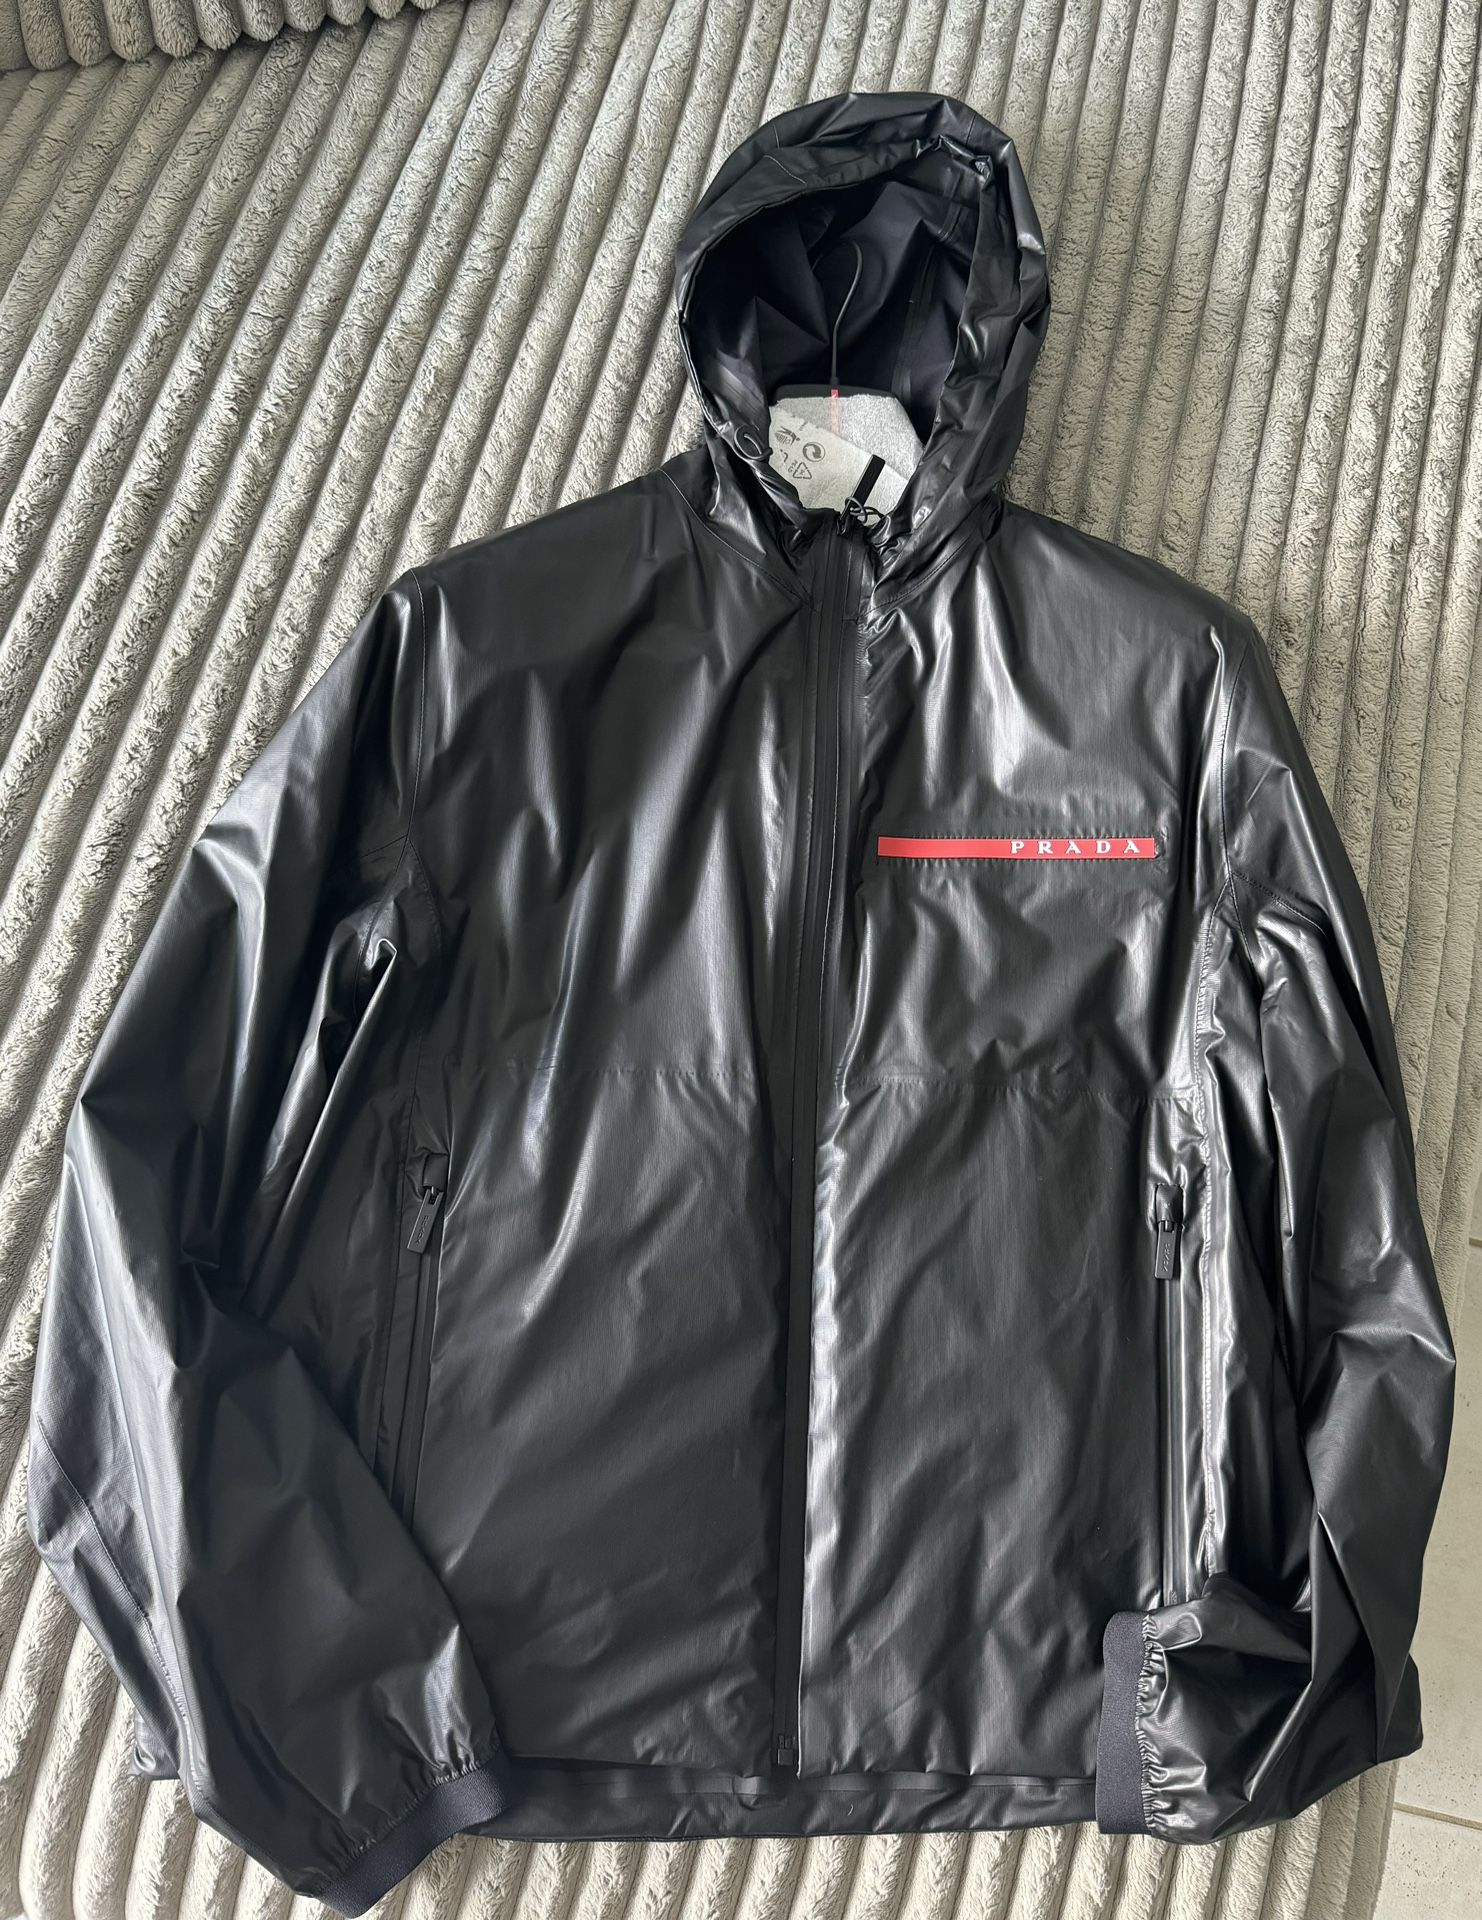 PRADA rain Jacket - Brand New With Tags